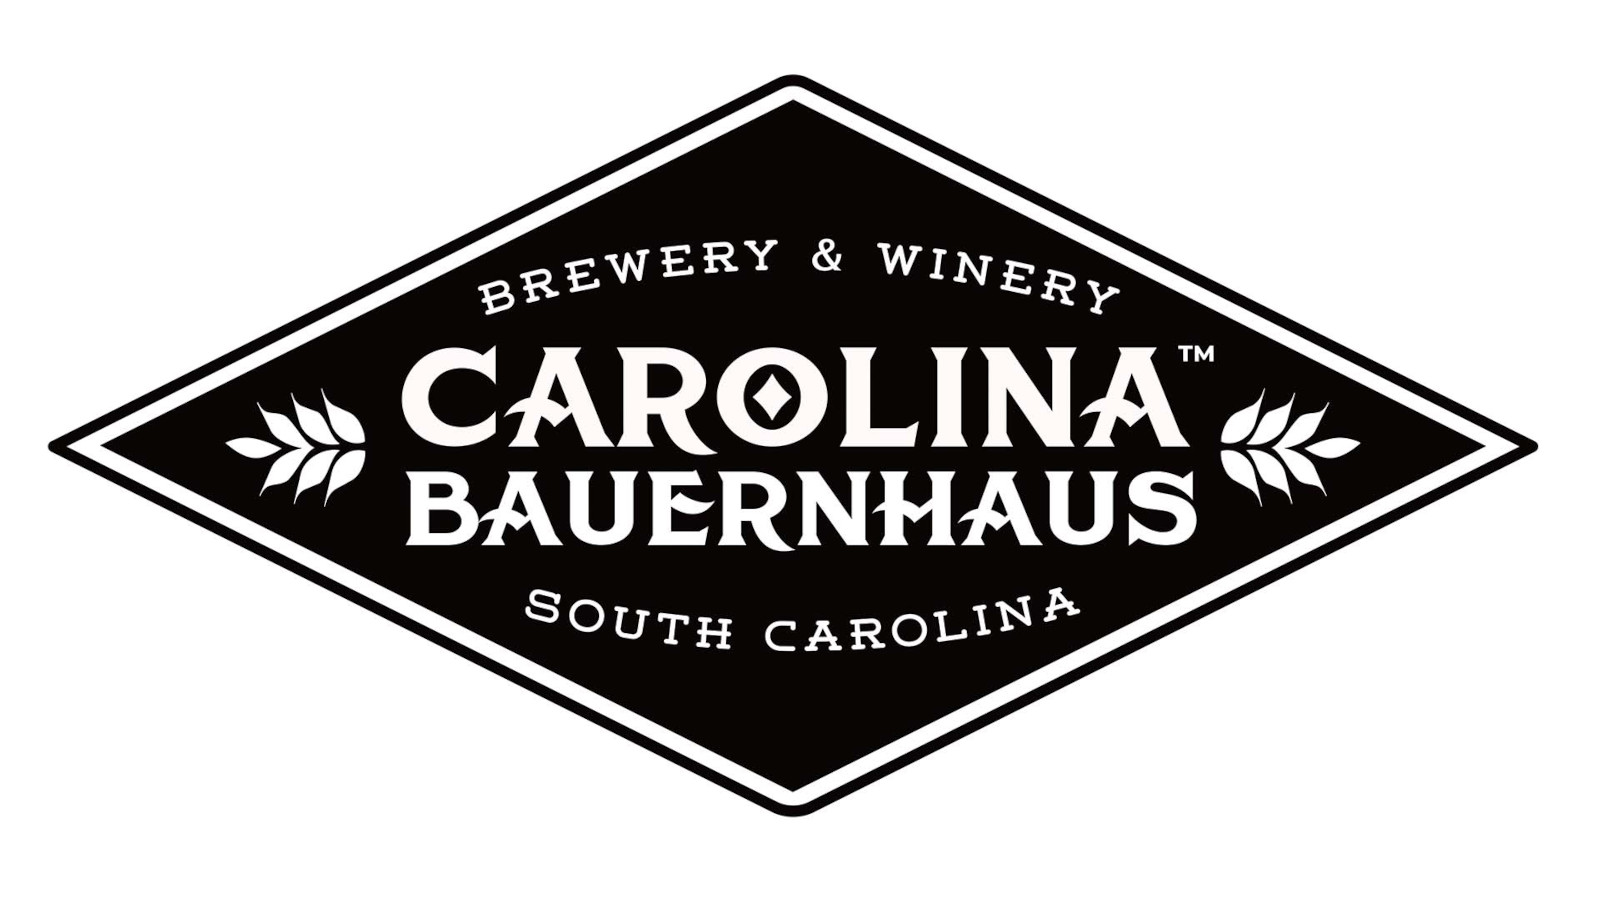 Carolina Bauernhaus Brewery & Winery $100 Gift Card US 56.5 usd